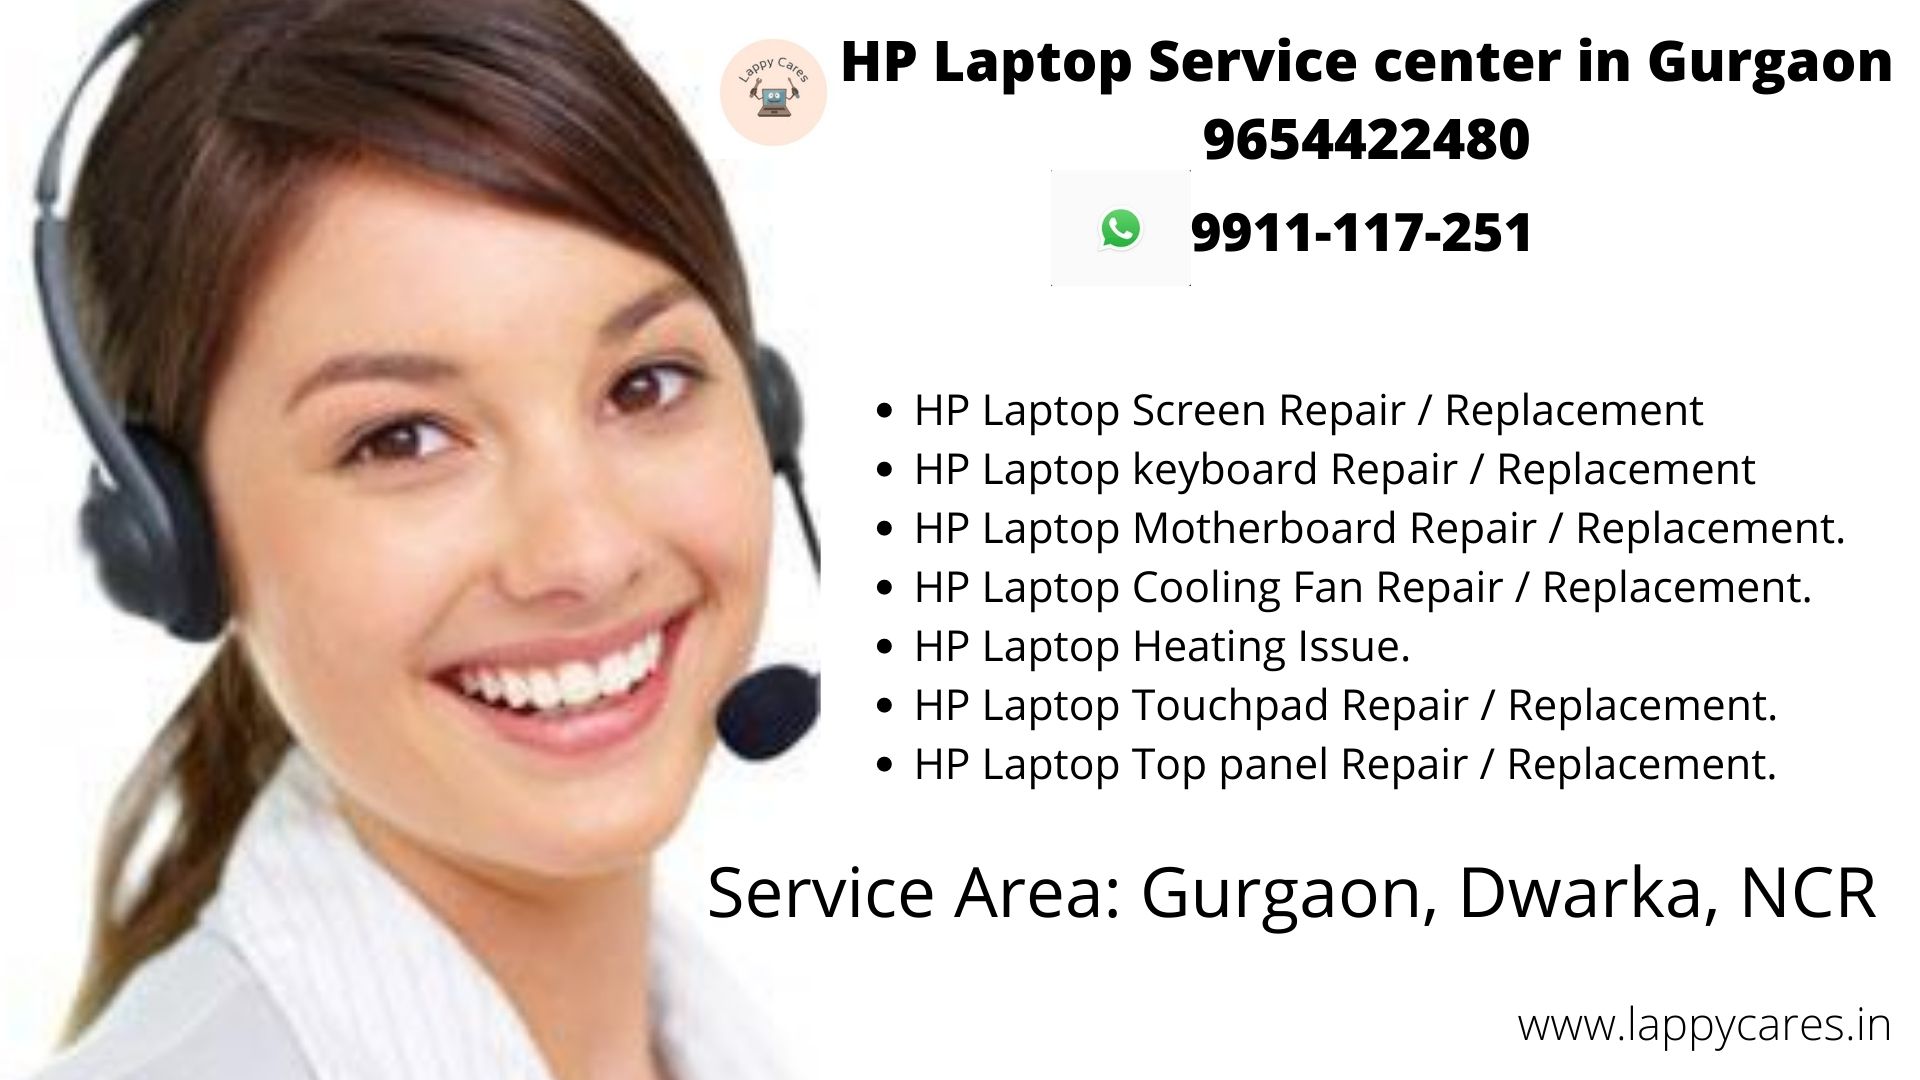 HP LAPTOP SERVICE CENTER GURGAON 9654422480